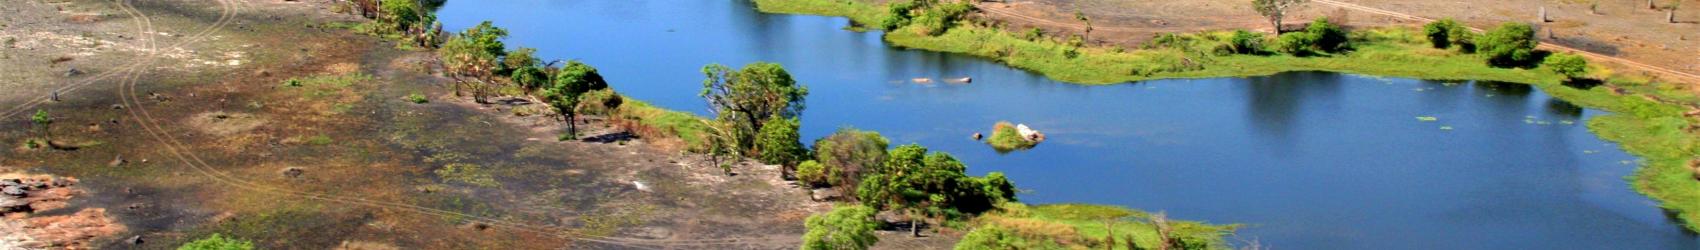 Okovango River